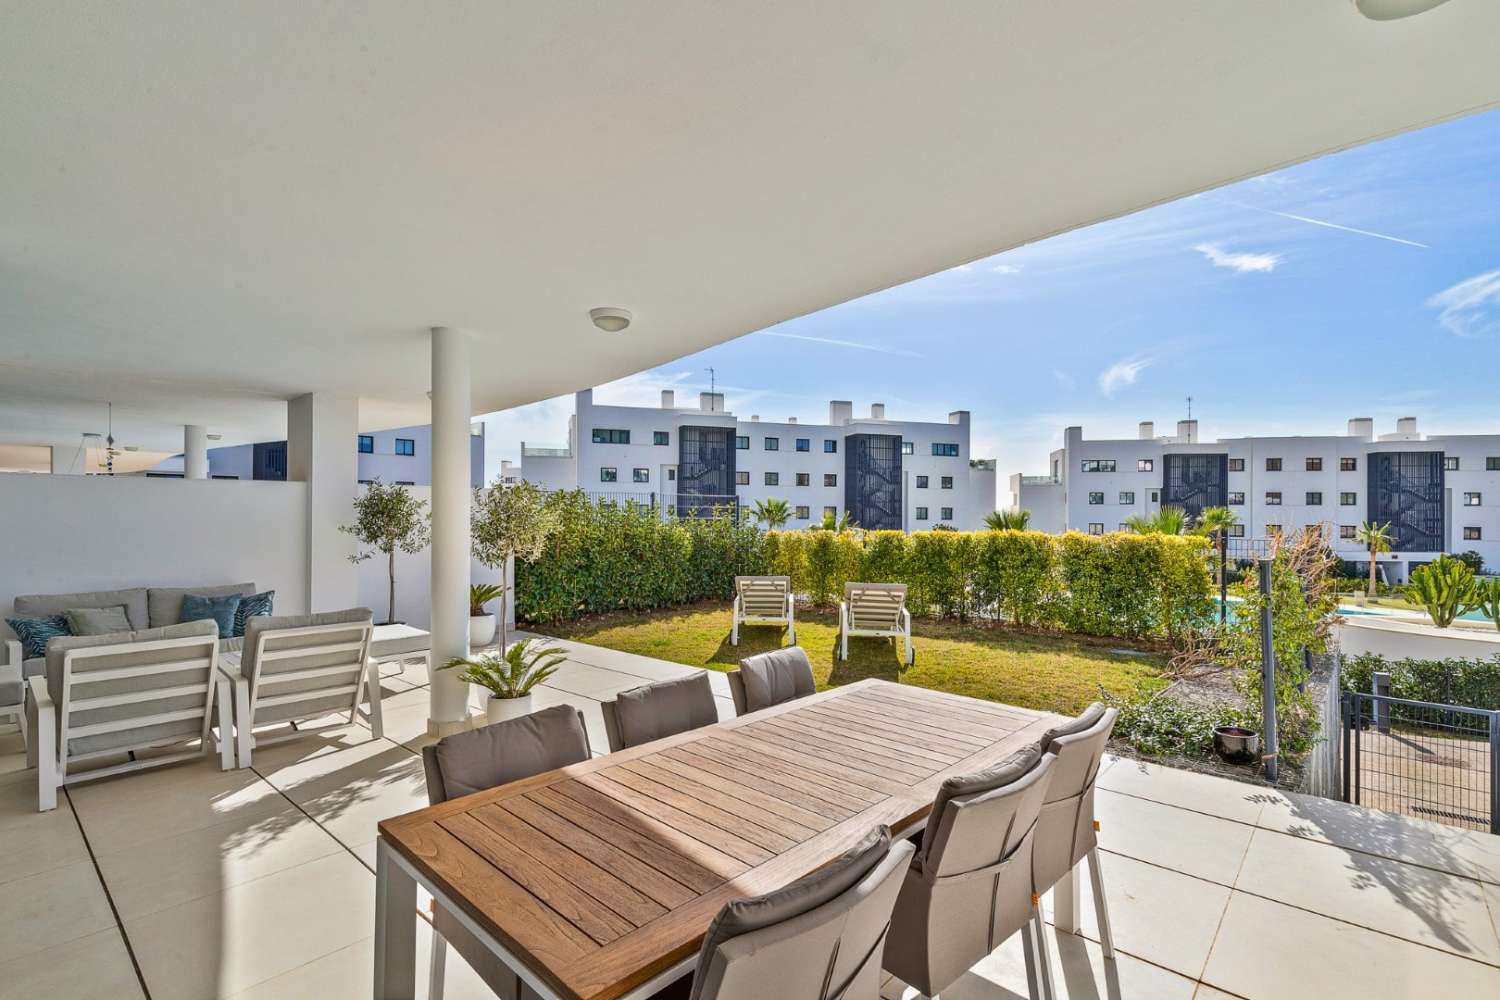 Fantastic garden apartment located in the Urbanization Higueron West